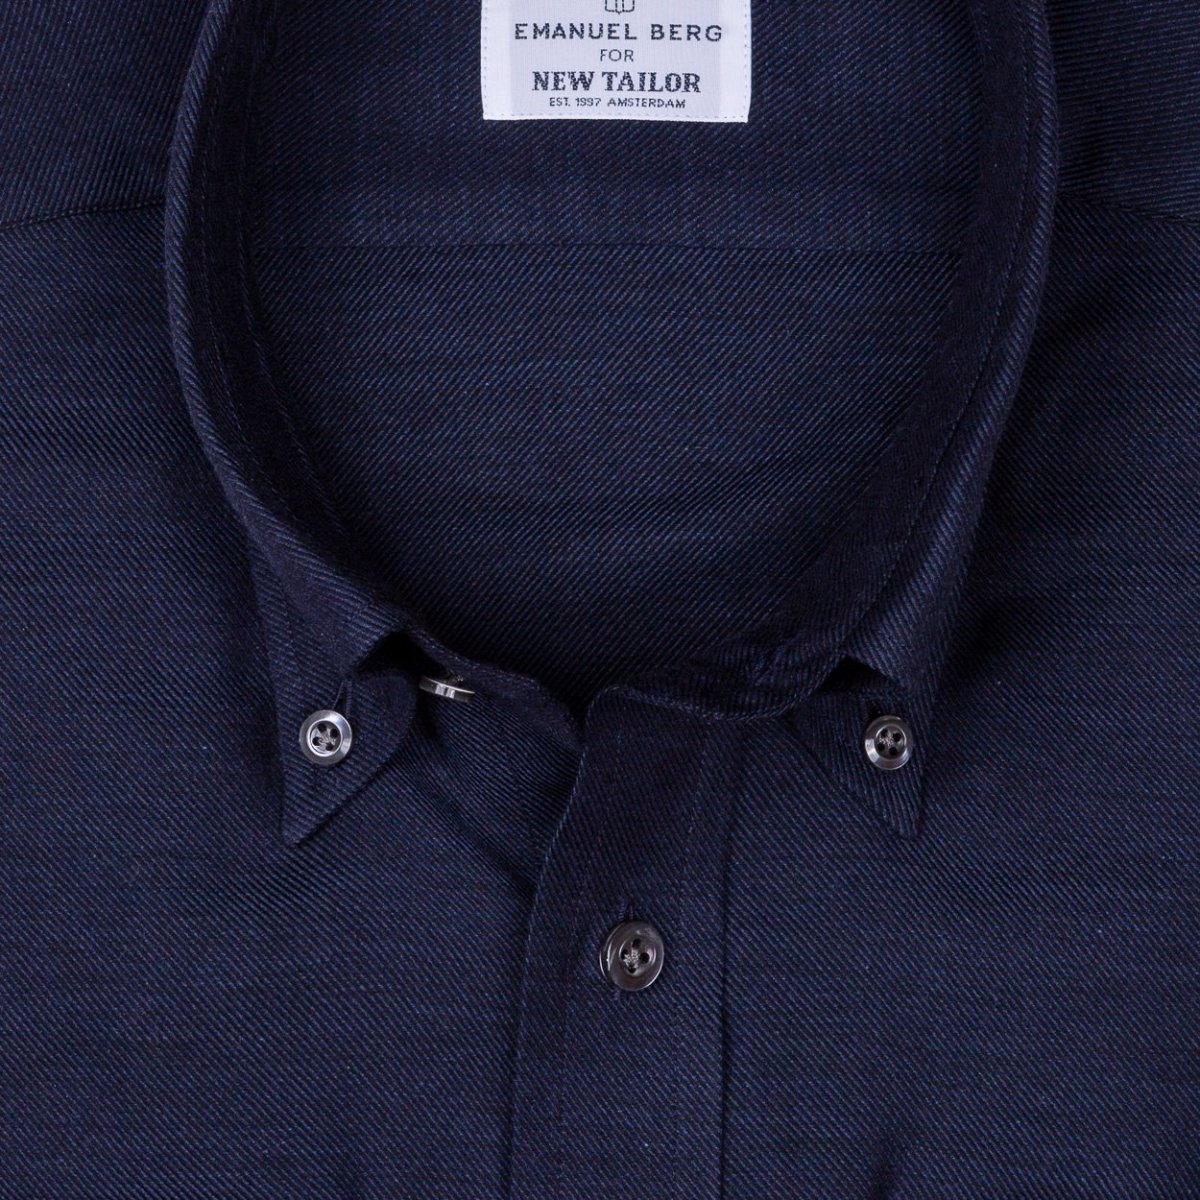 Emanuel Berg - Maatshirt, Dark-Blue Plain Cotton/Cashmere (Smart Casual), Shirt | NEW TAILOR Webshop